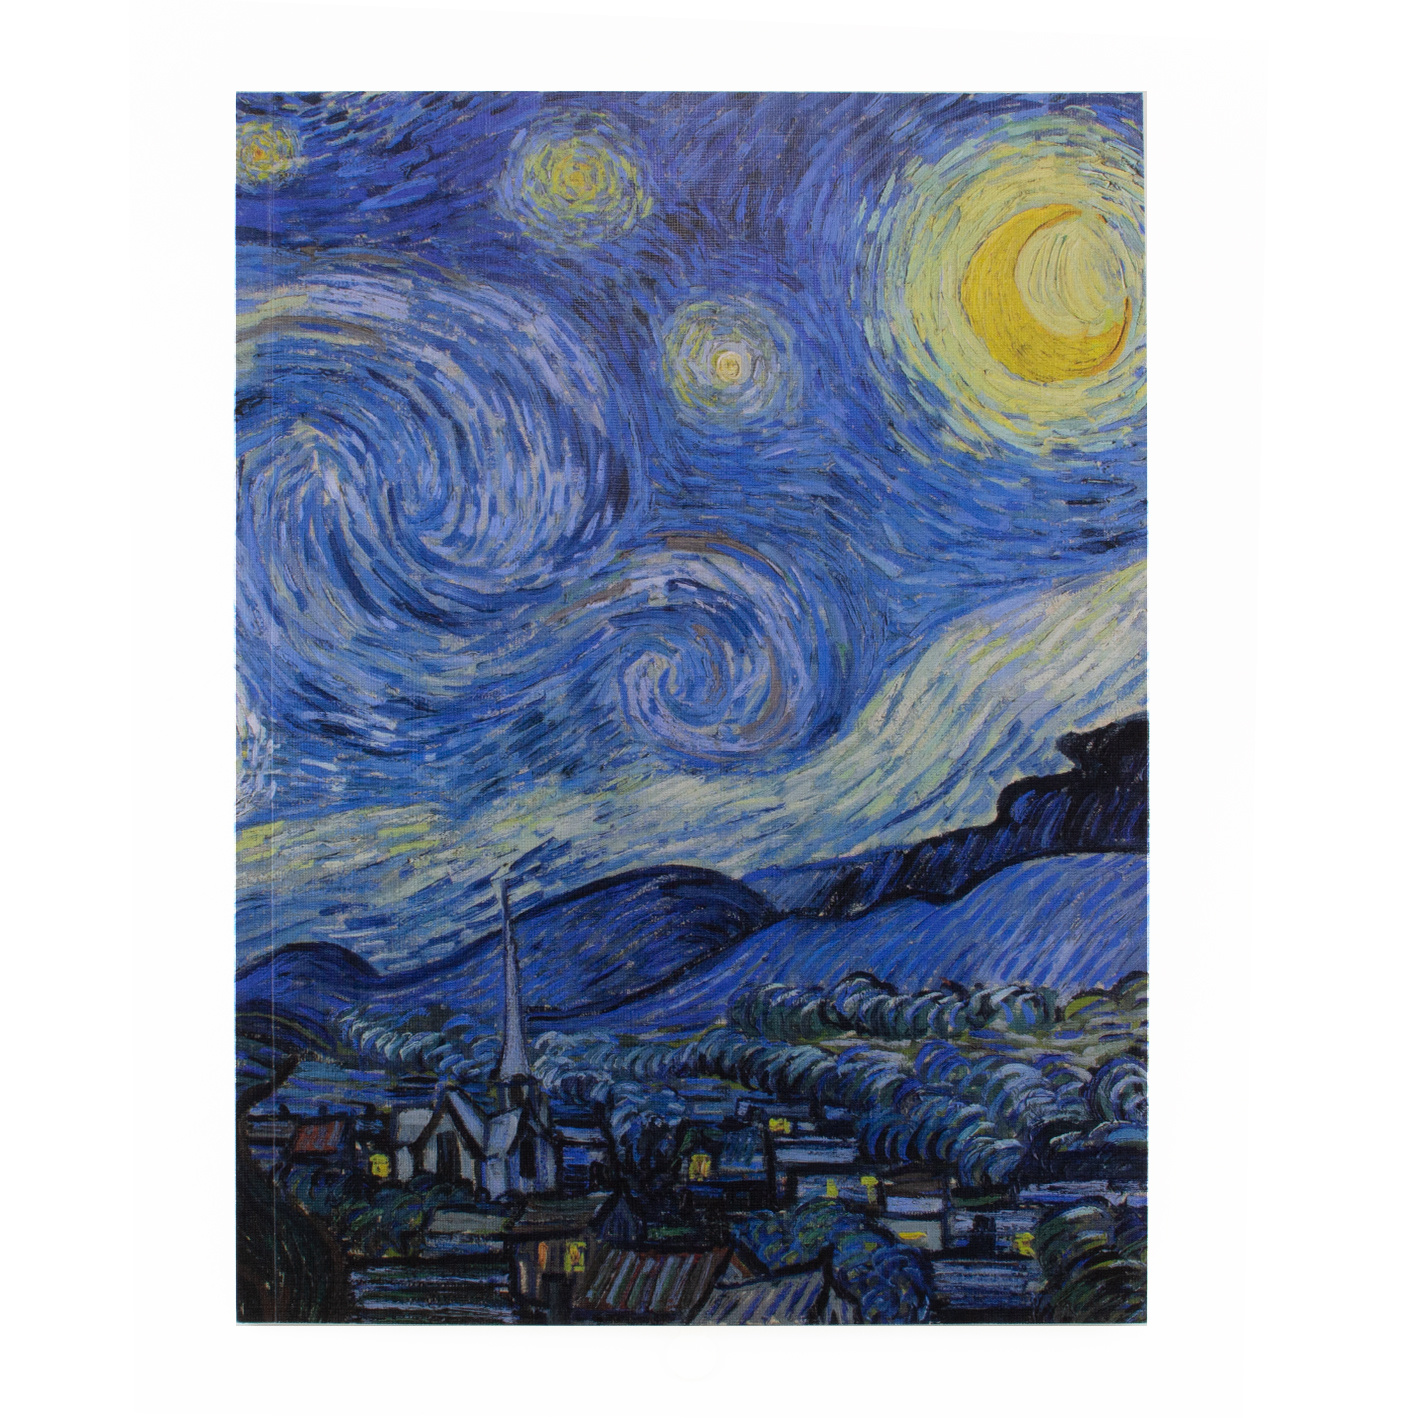 The Starry Night, Sketchbook, Hardcover Journal, Vintage Painting, Vincent  Van Gogh, 1889, Notebook 